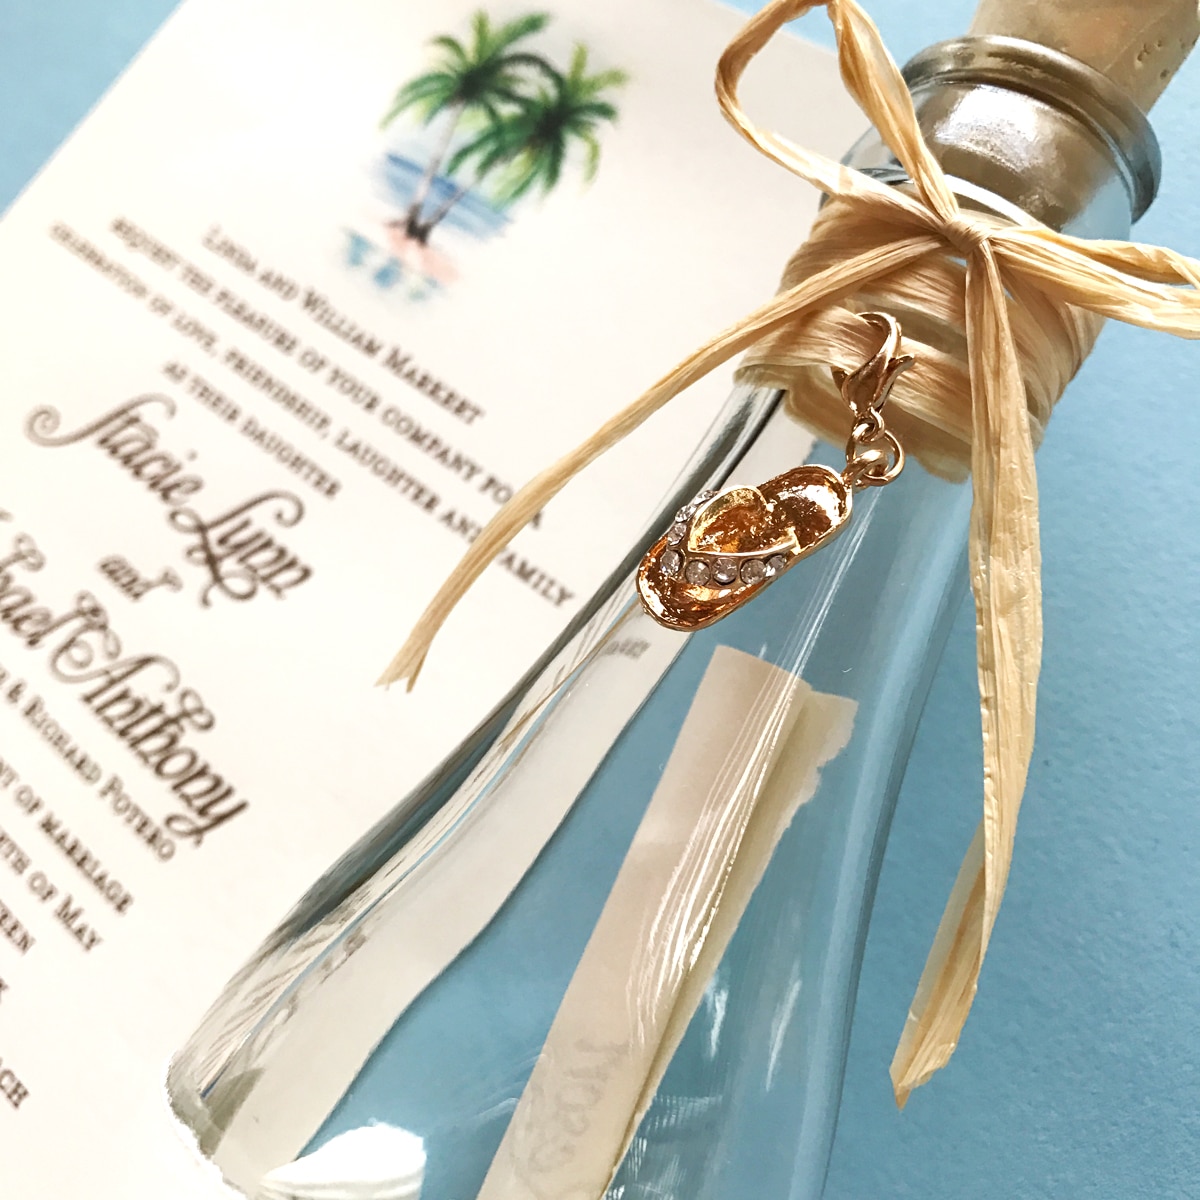 Custom beach wedding invitations in a bottle by artist Michelle Mospens. | Mospens Studio